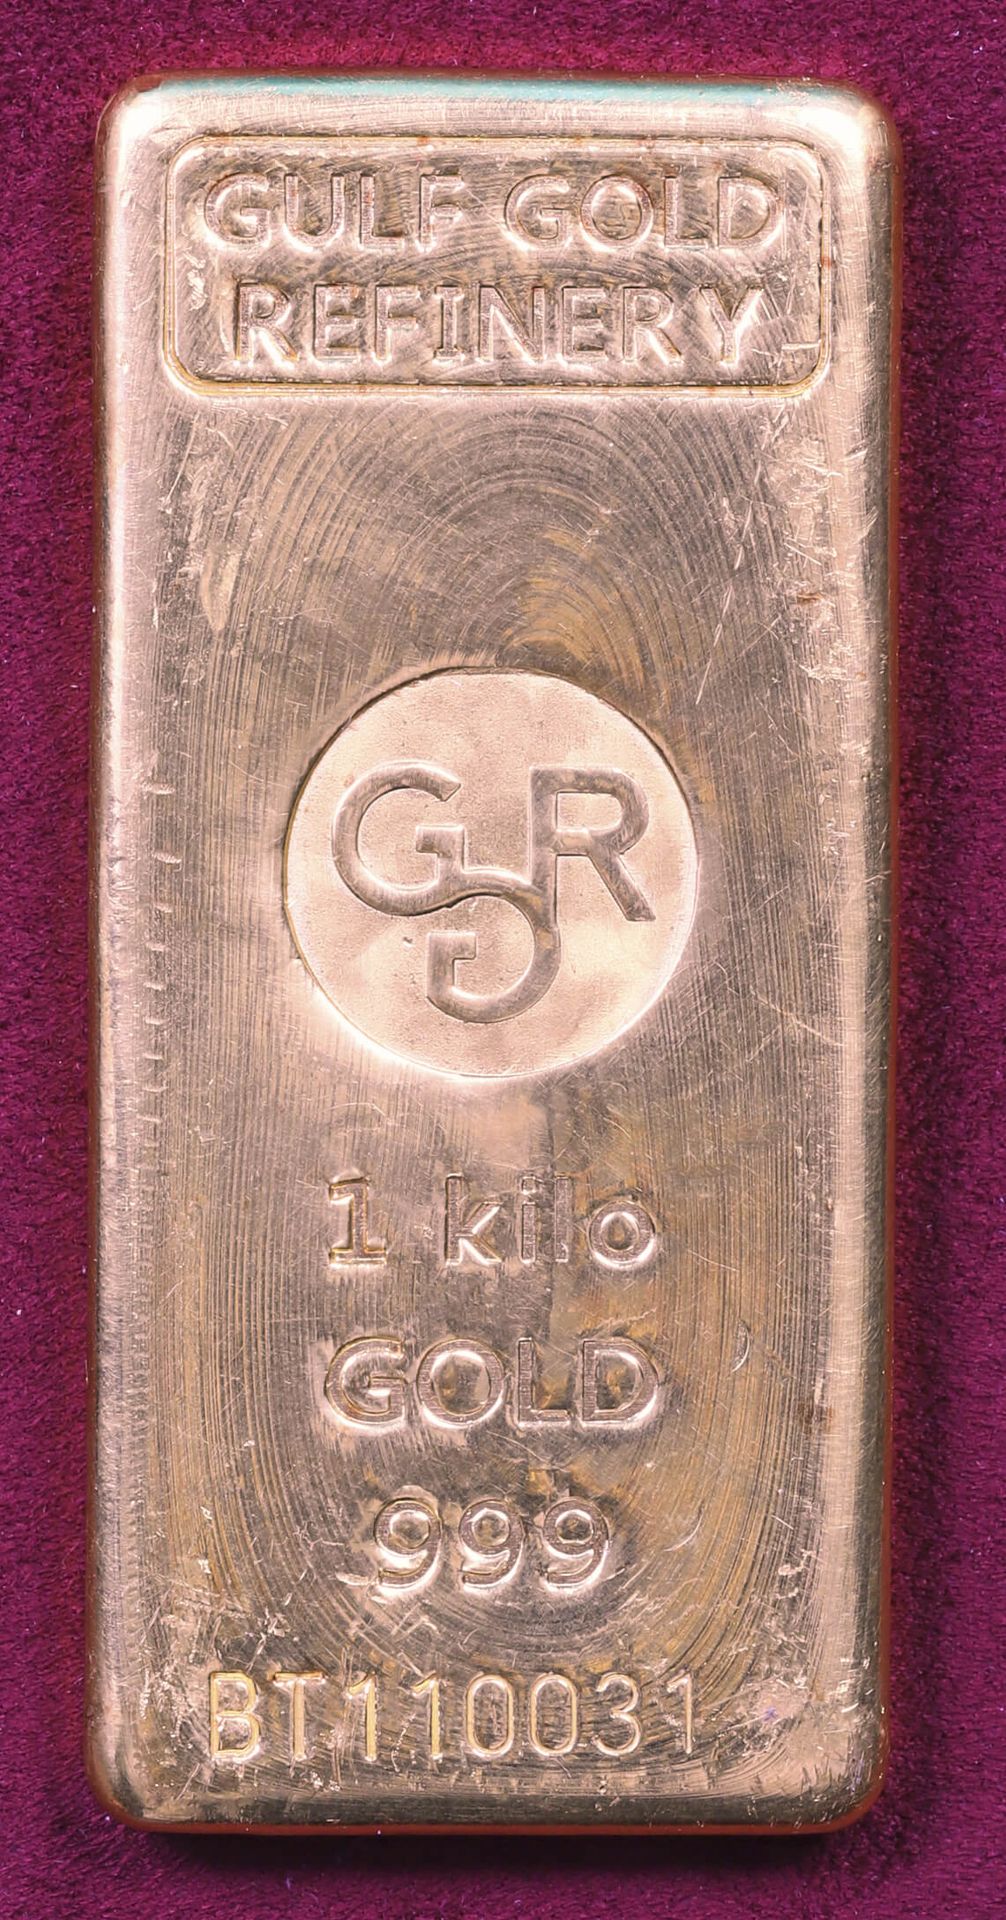 Null Gold ingot (999‰)

Gulf gold refinery

Numbered BT110031

Weight 998 g 

Wi&hellip;